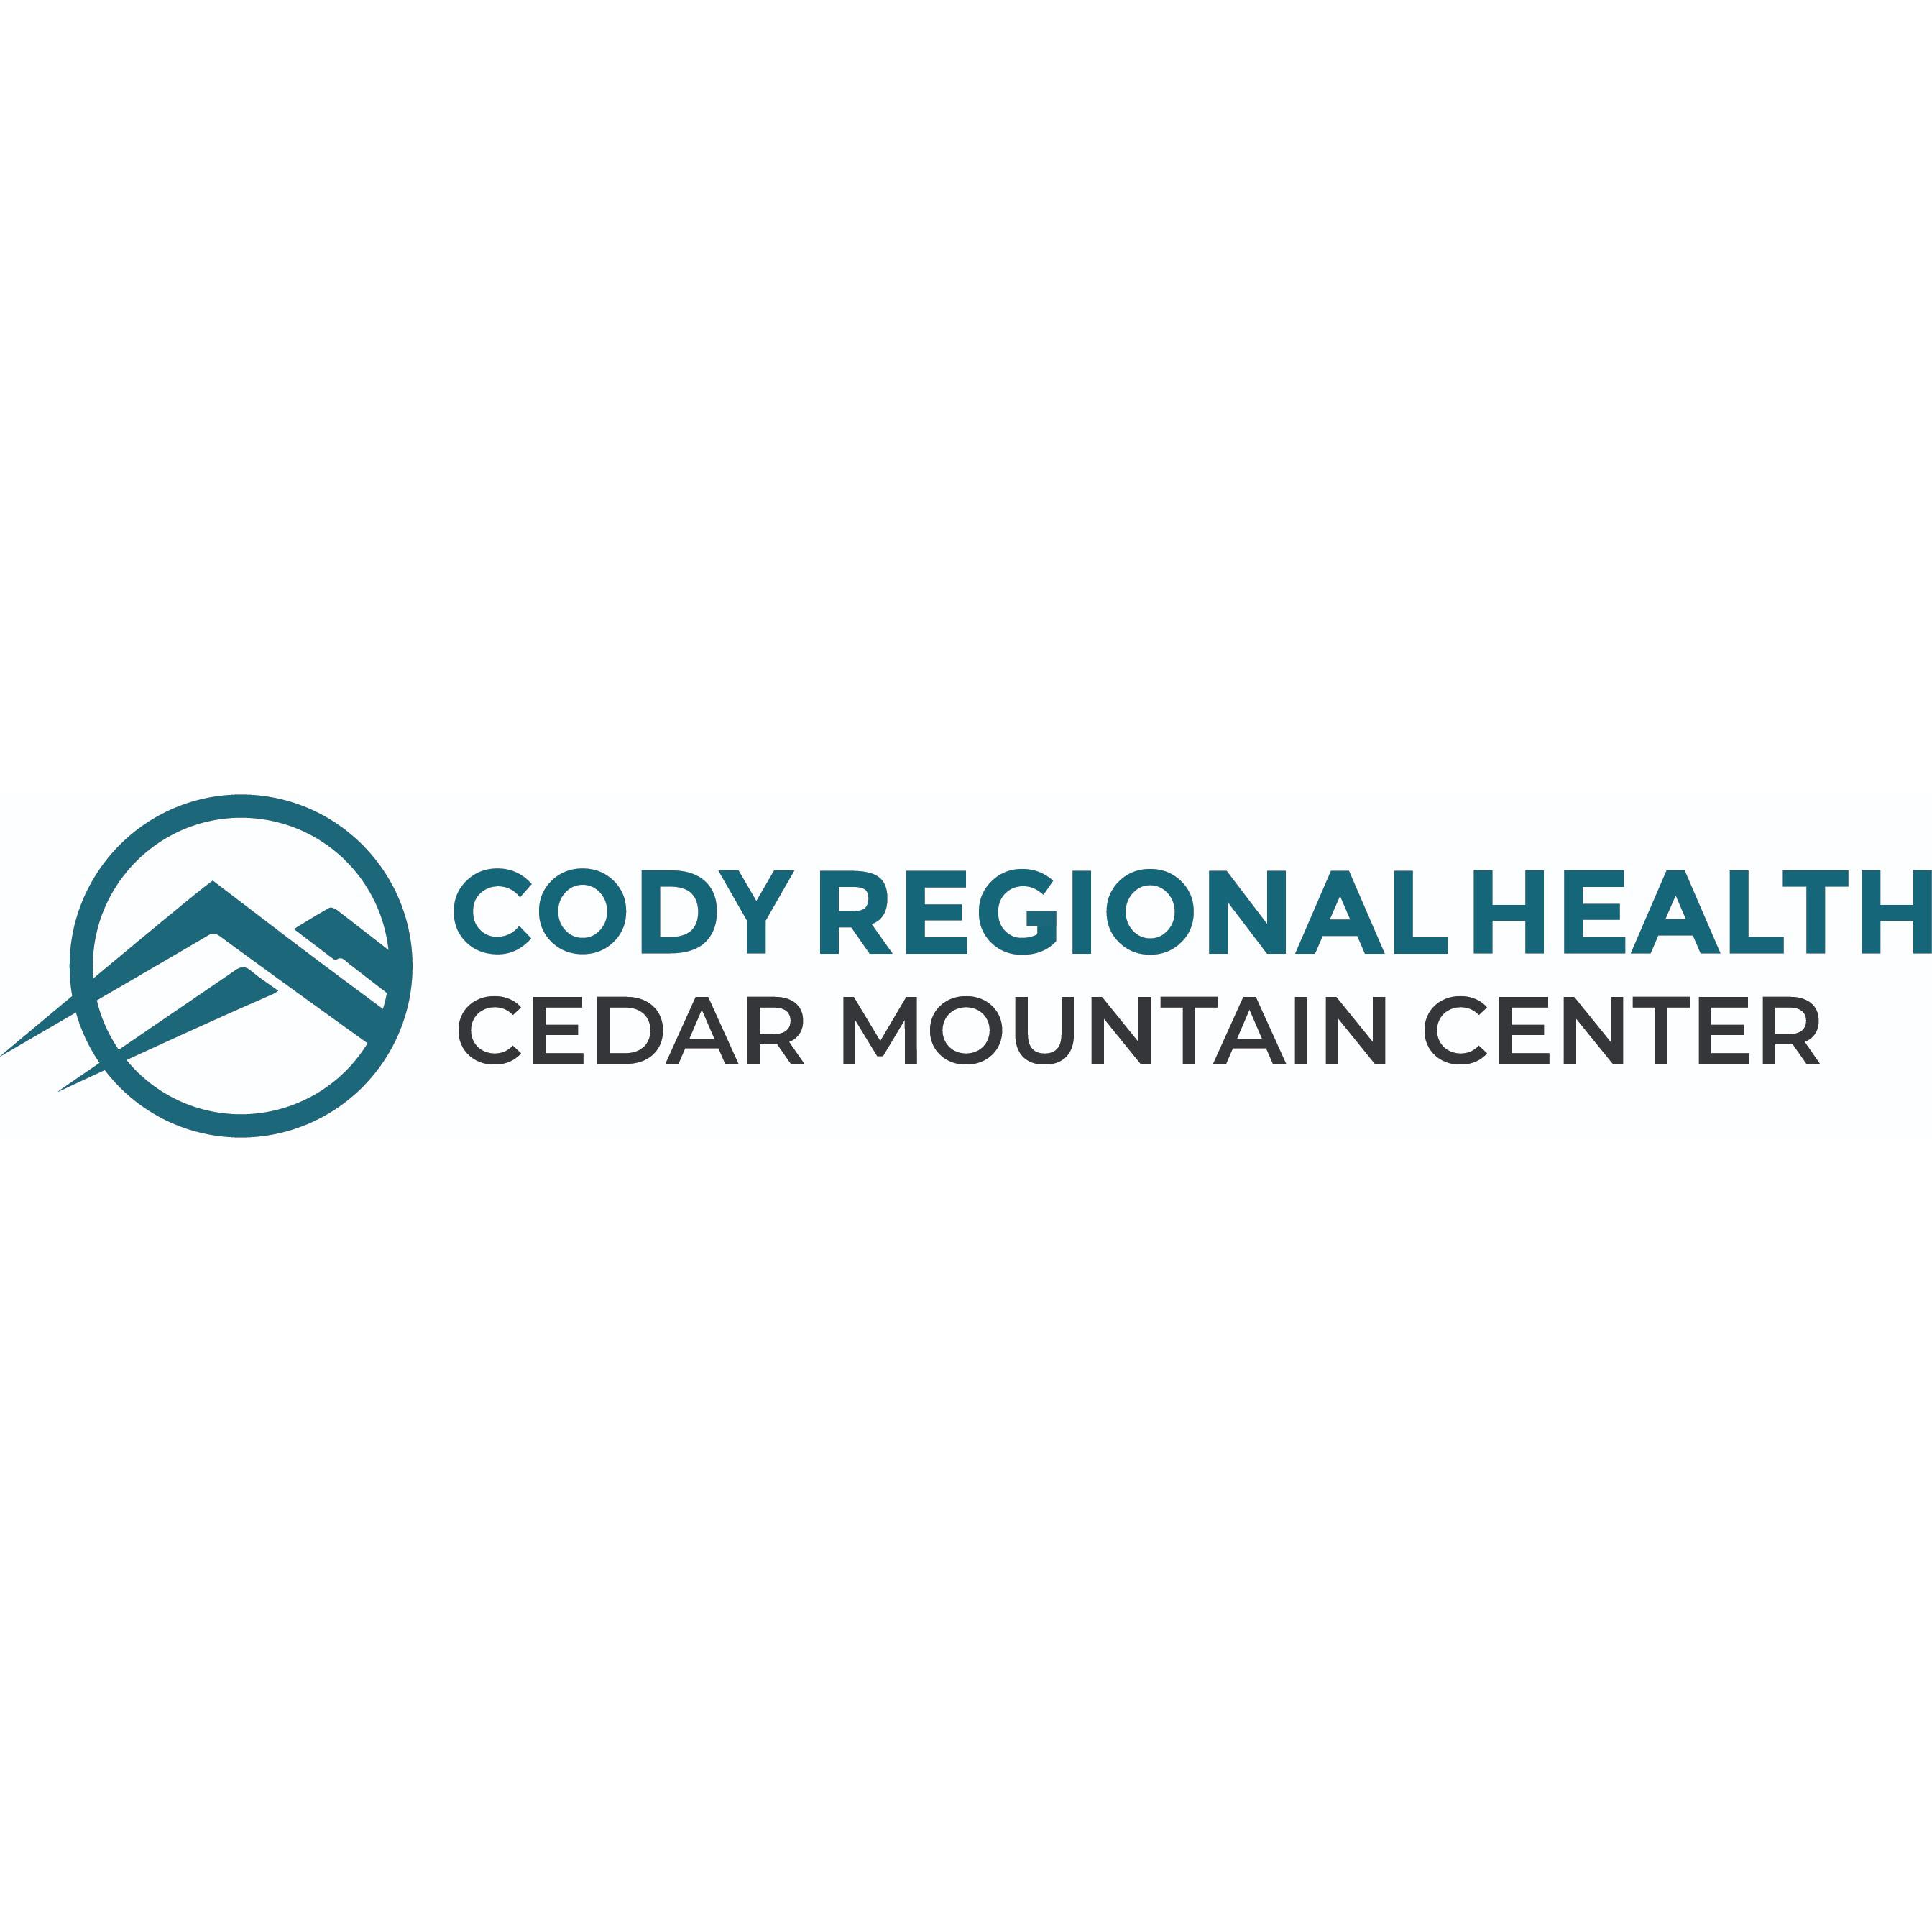 Cody Regional Health Cedar Mountain Center